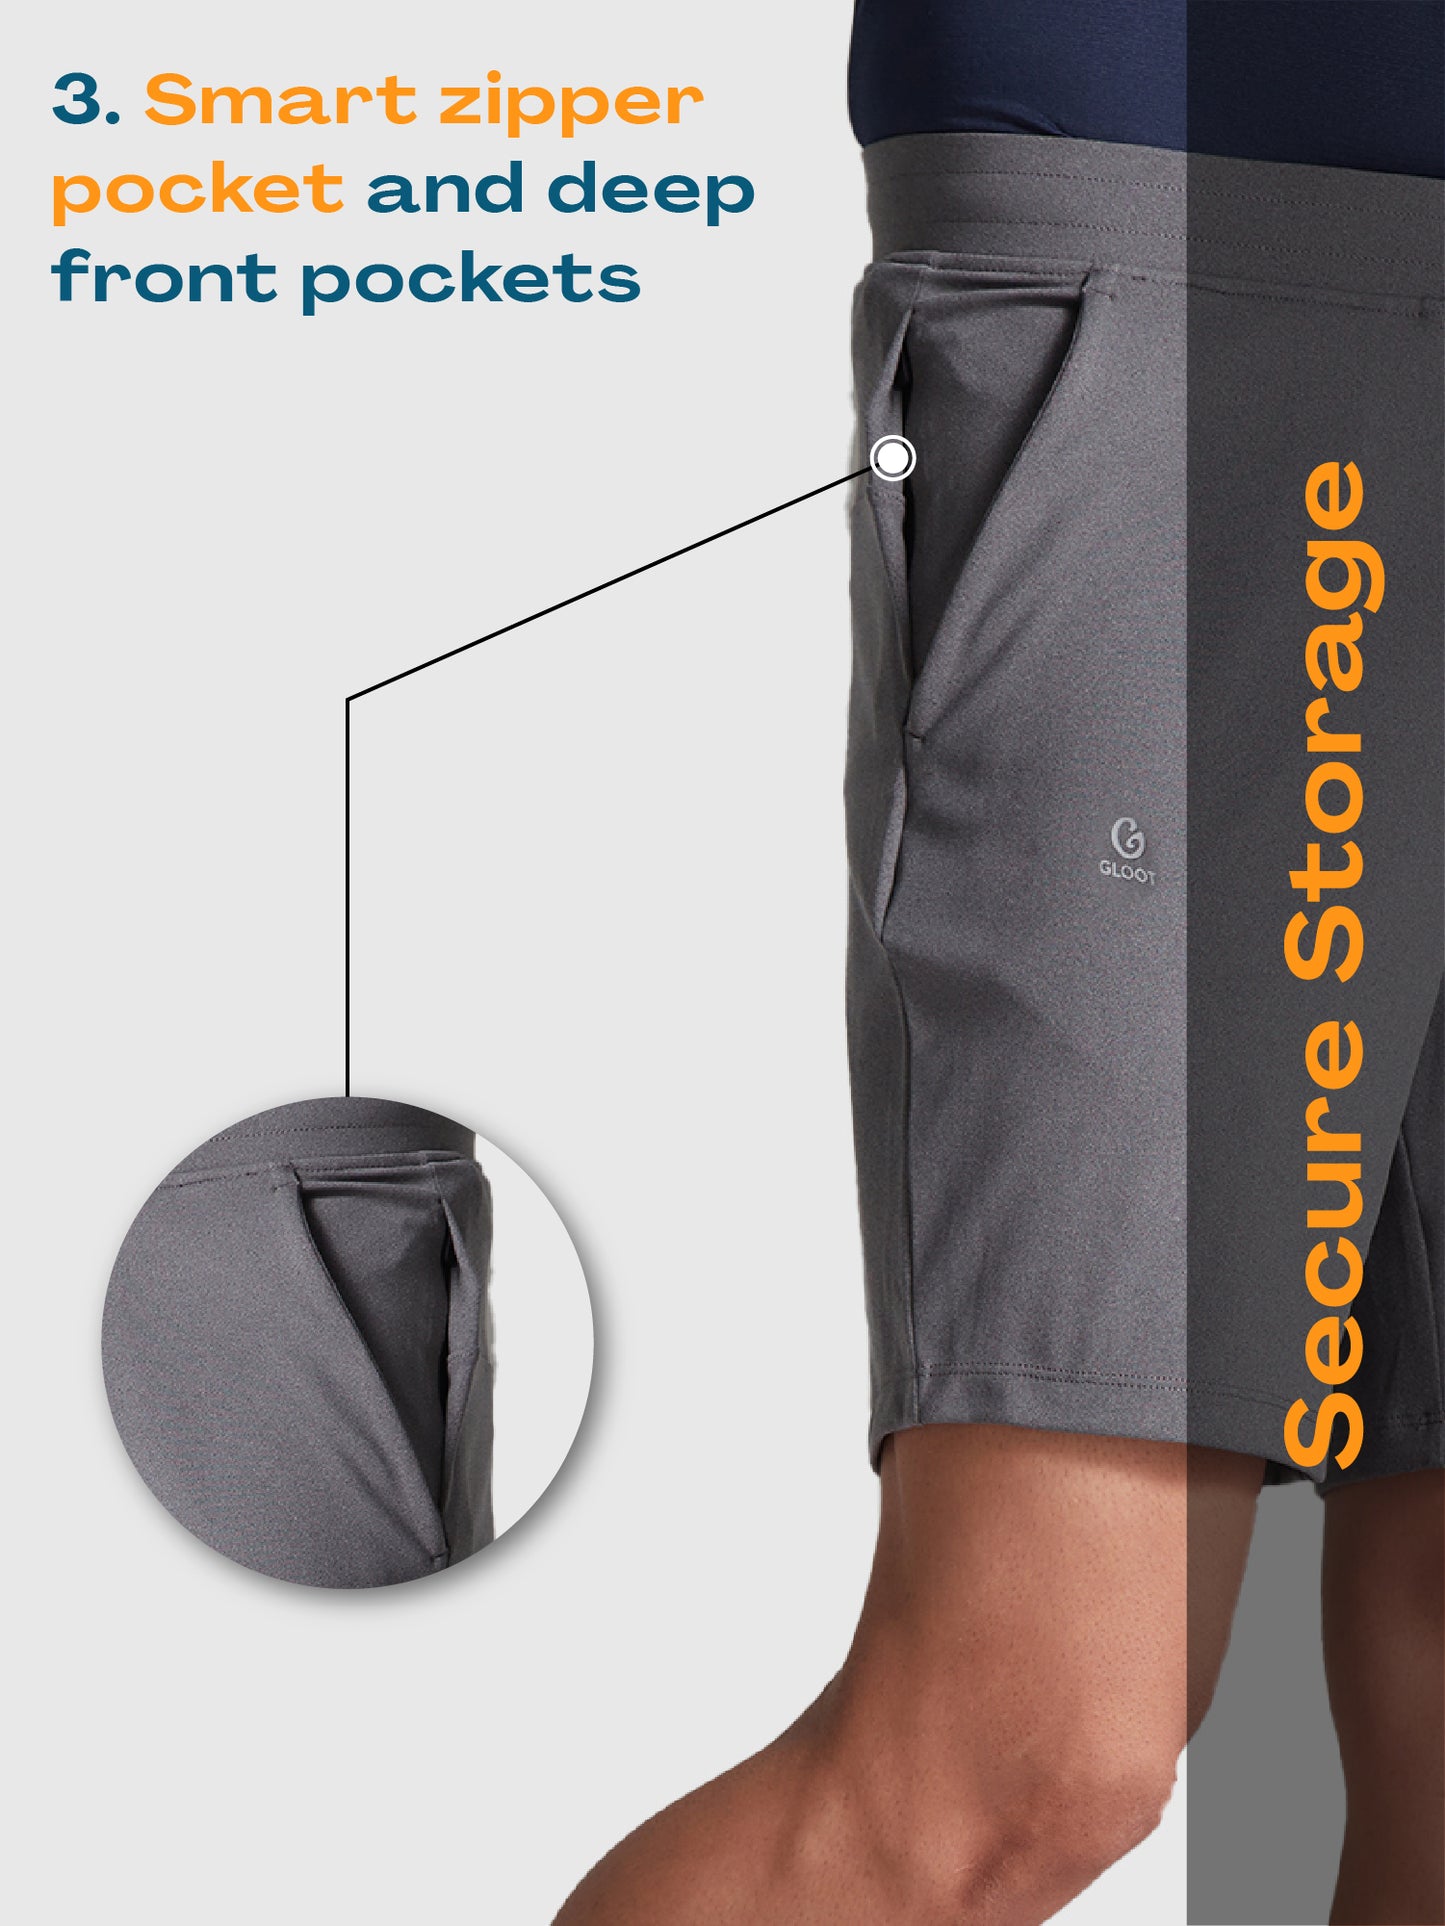 Active Sports Shorts 360° Stretch Light Grey